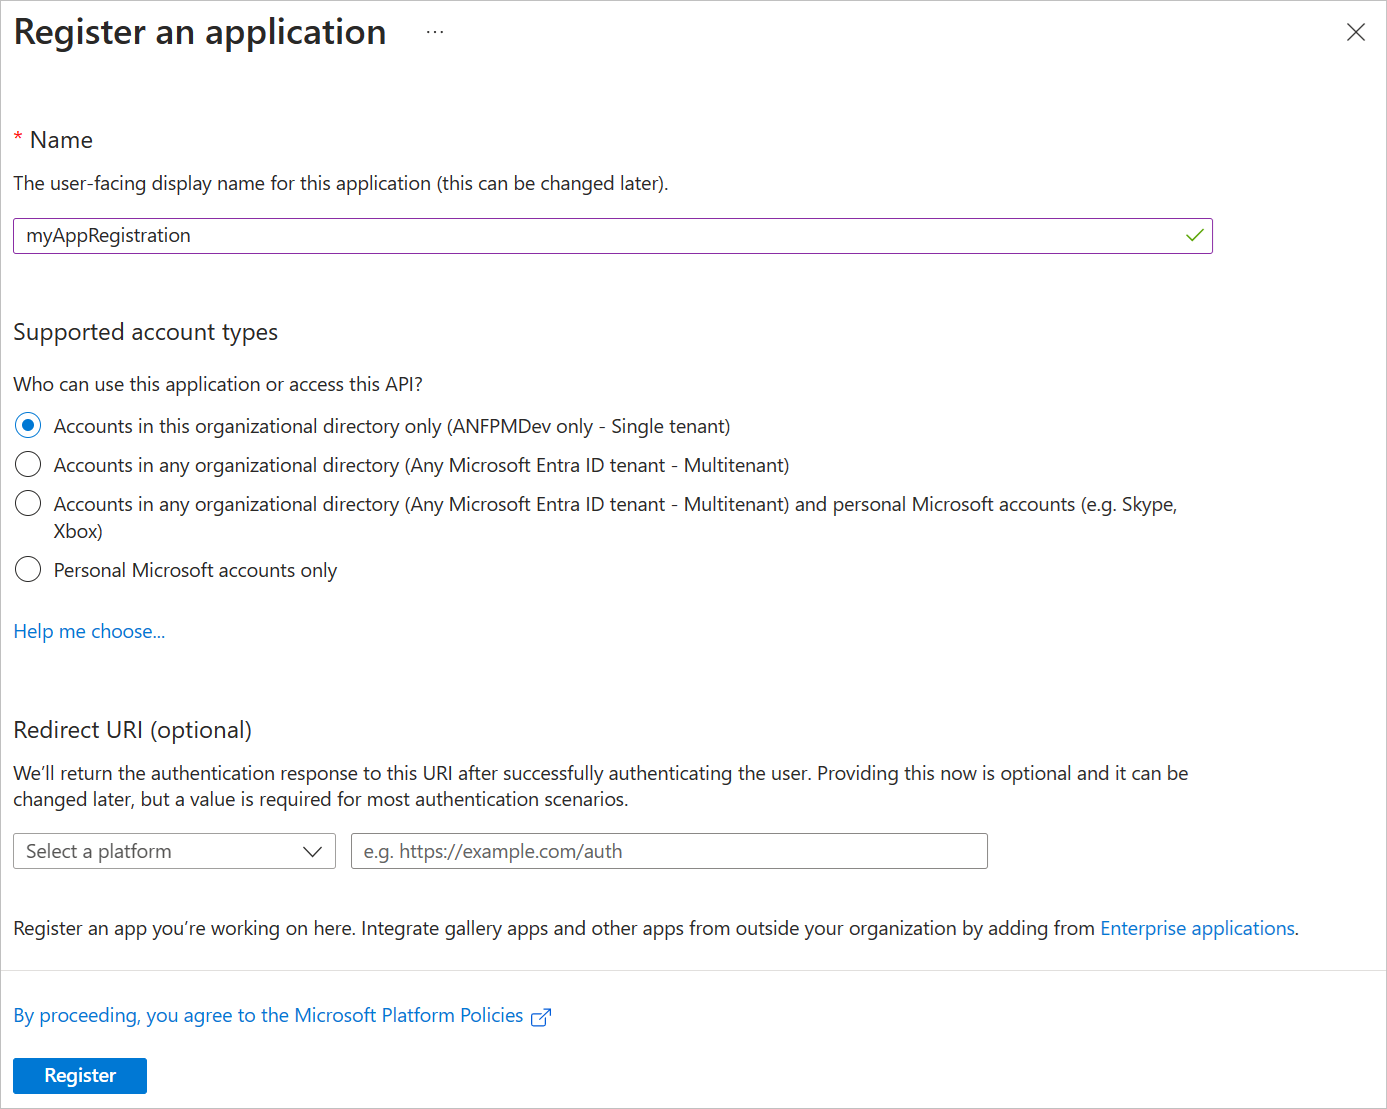 Screenshot to register application.